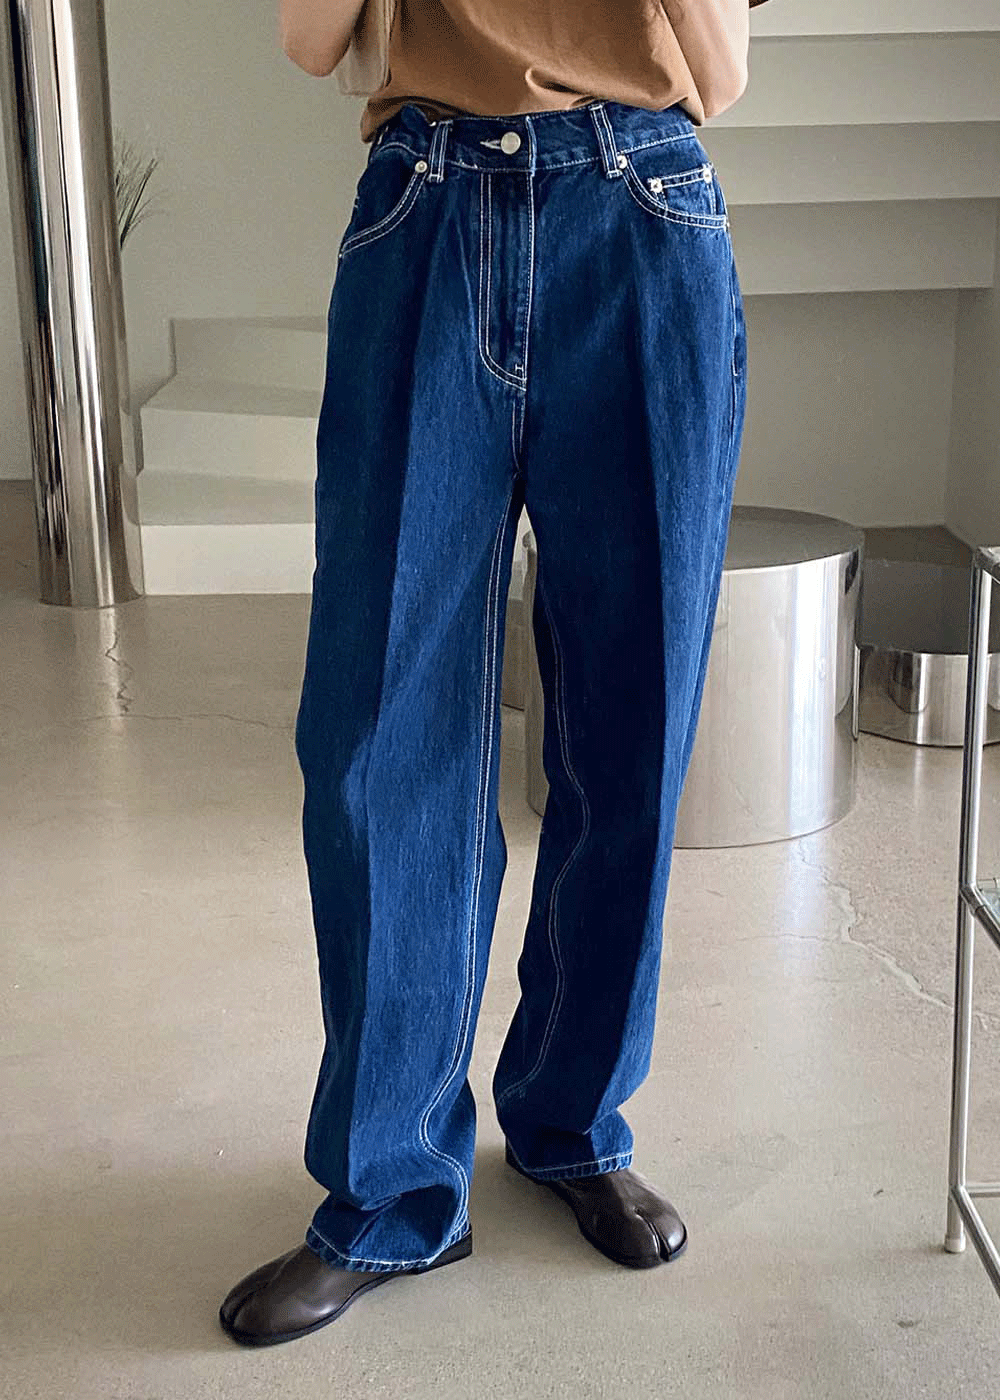 Stitch deep blue pants